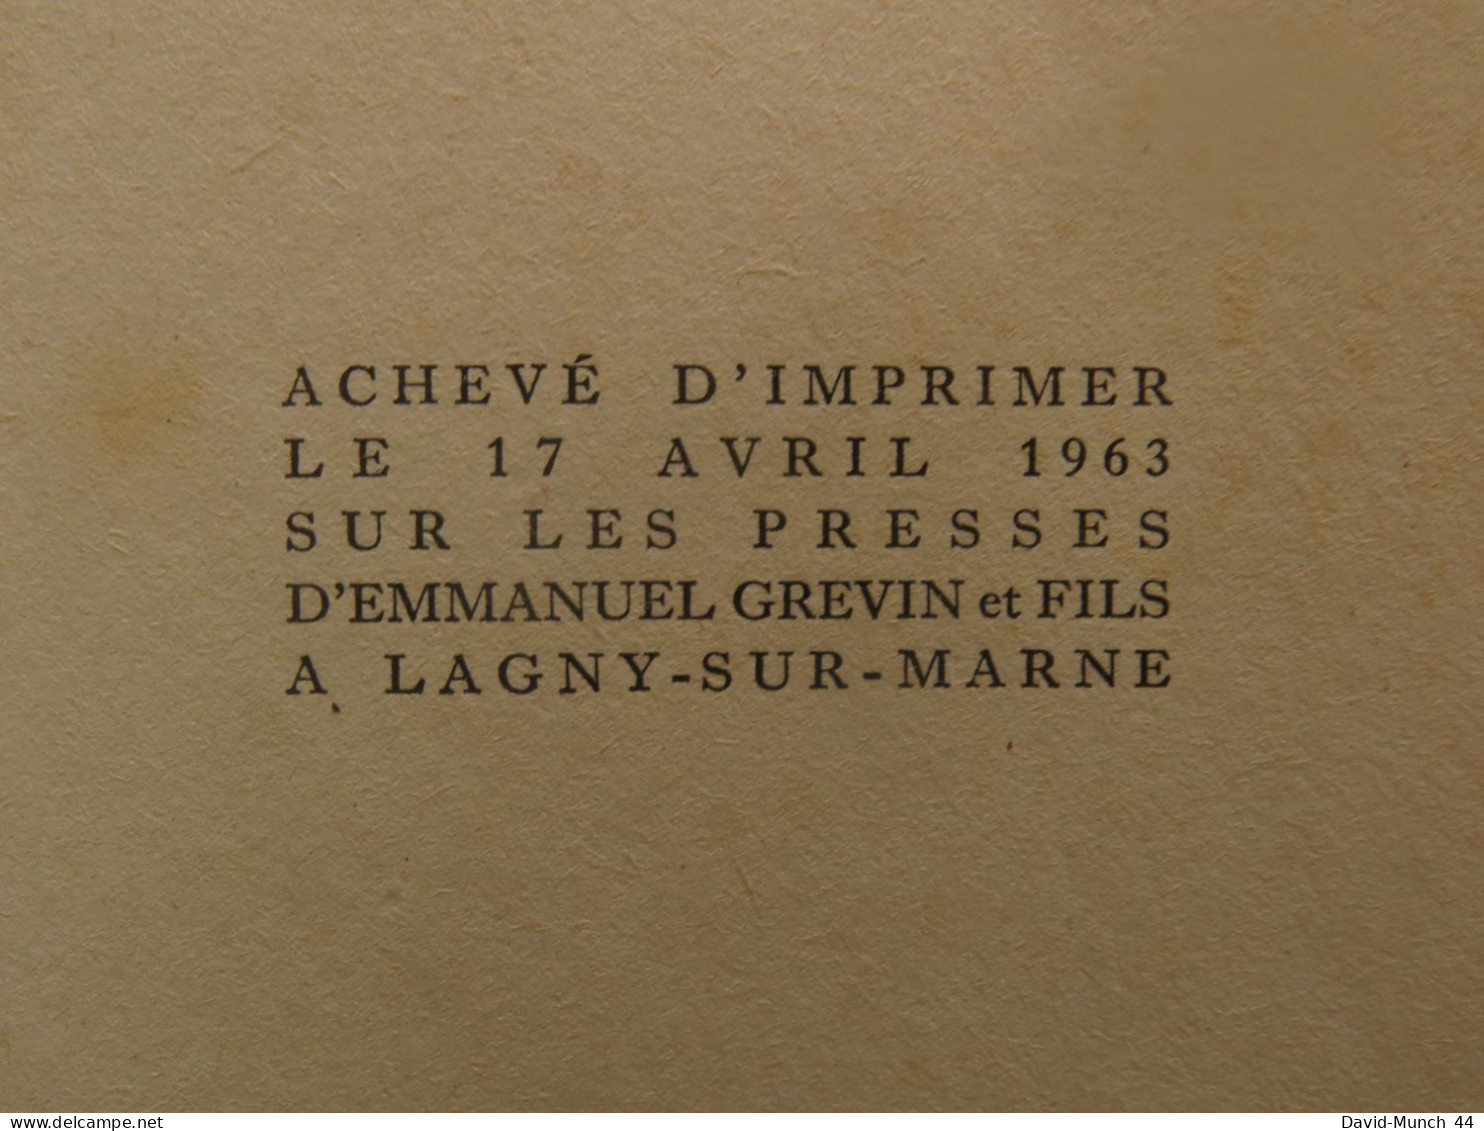 Clochemerle-les-bains de Gabriel Chevallier. Flammarion. 1963